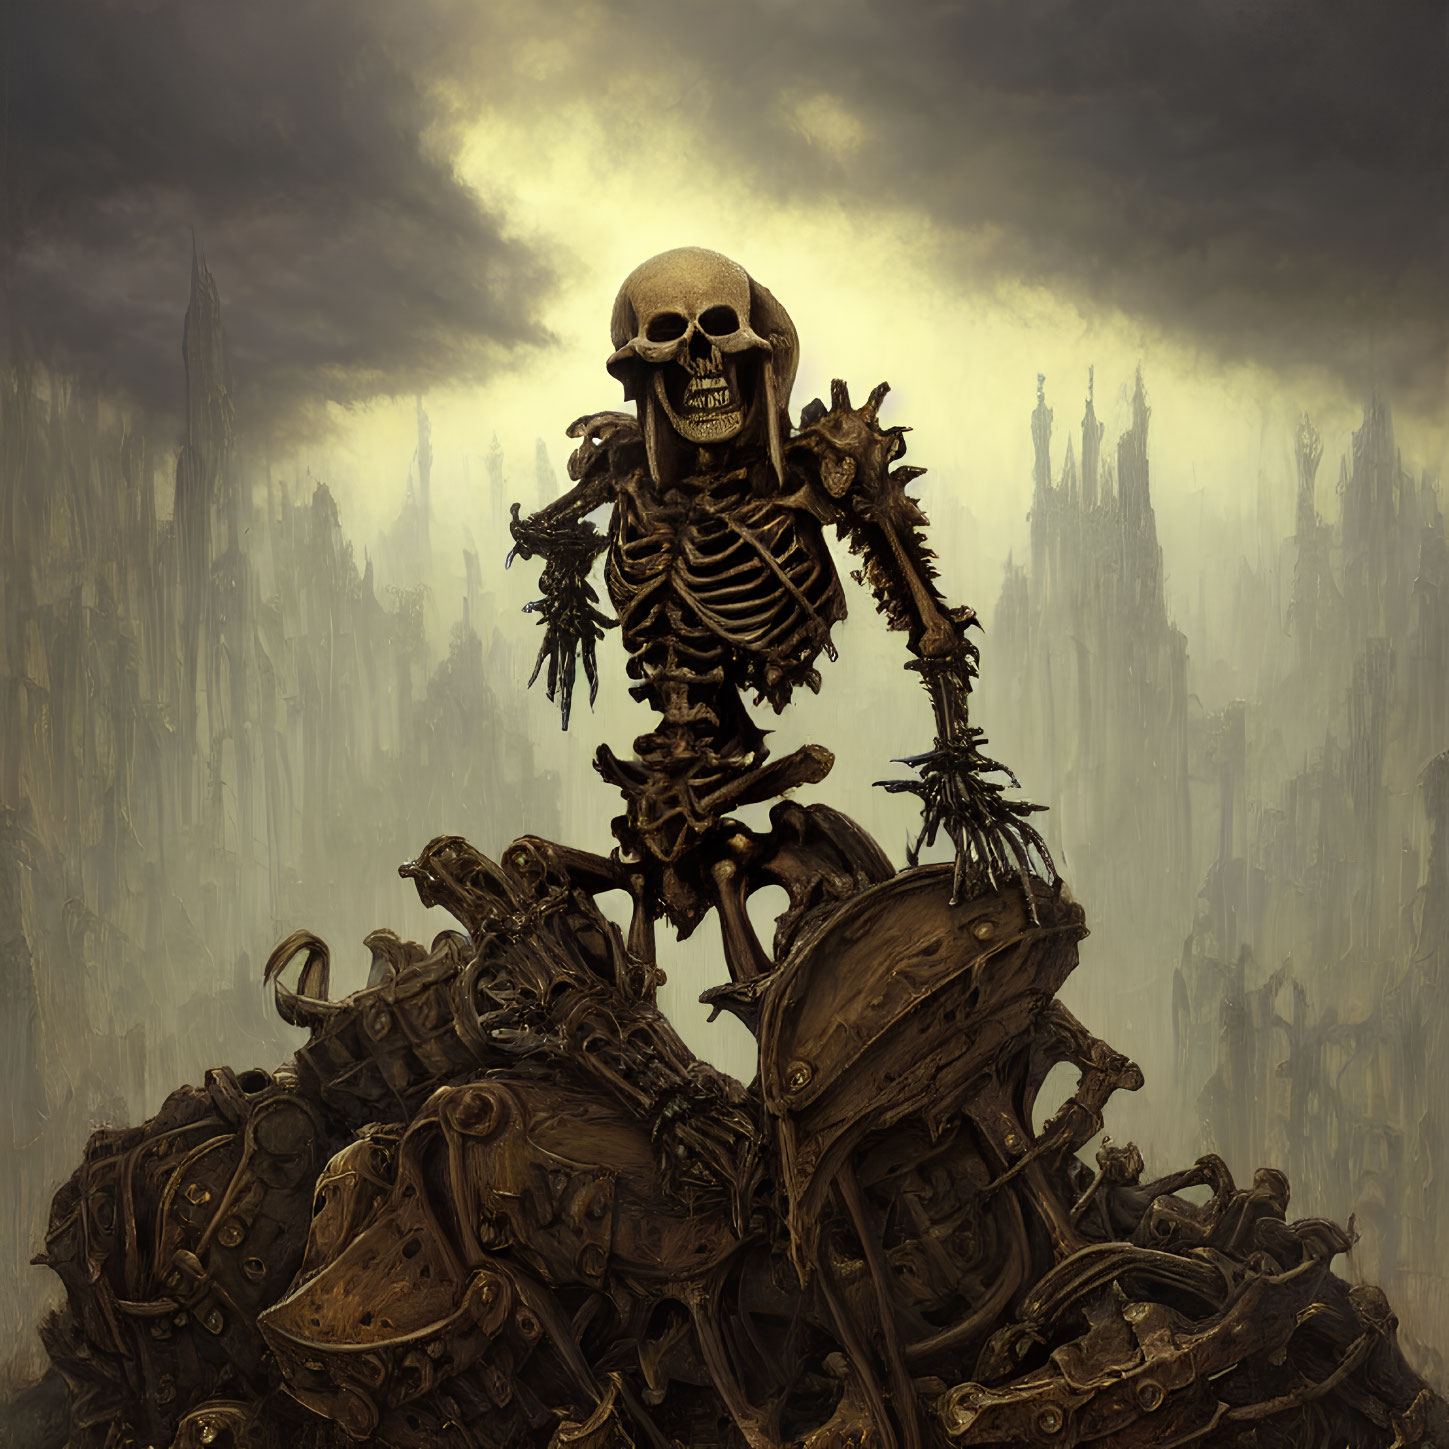 Skeletal figure above mechanical debris in dark, spire-filled setting